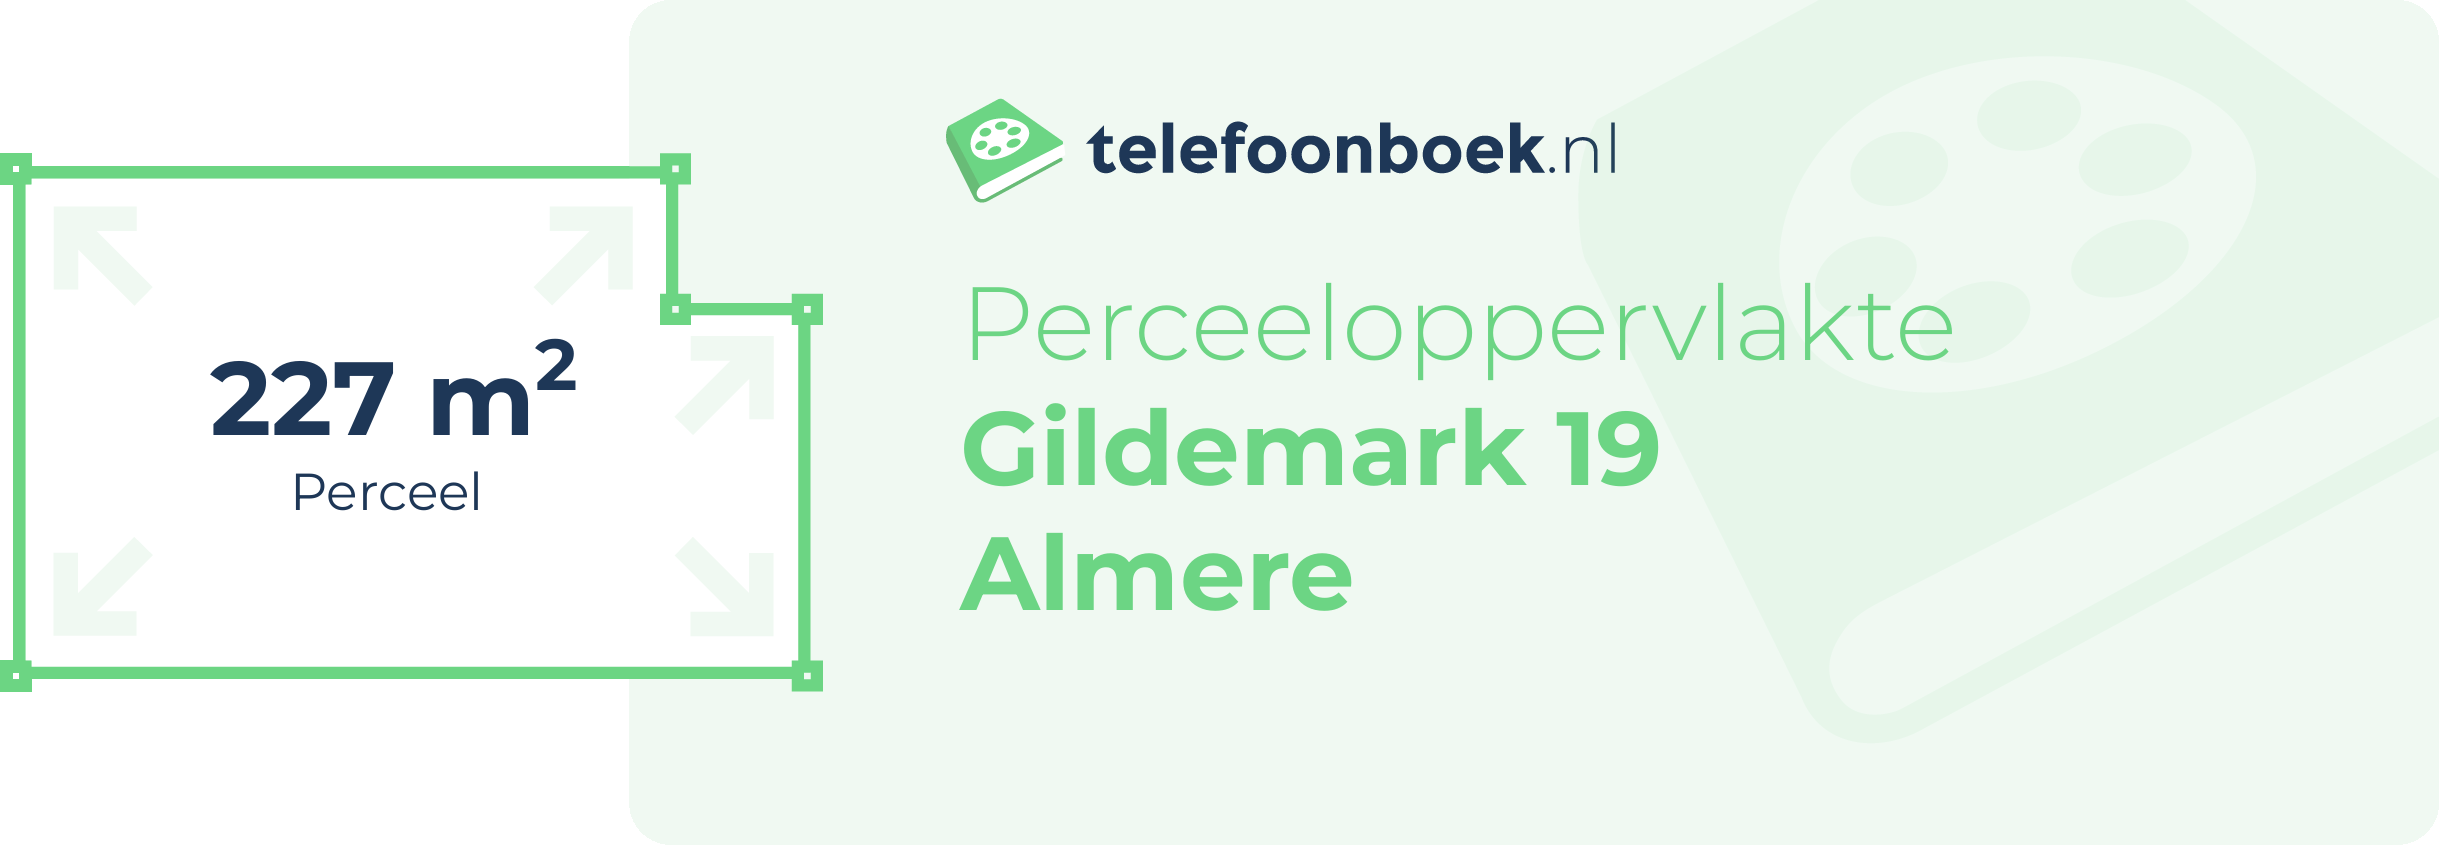 Perceeloppervlakte Gildemark 19 Almere